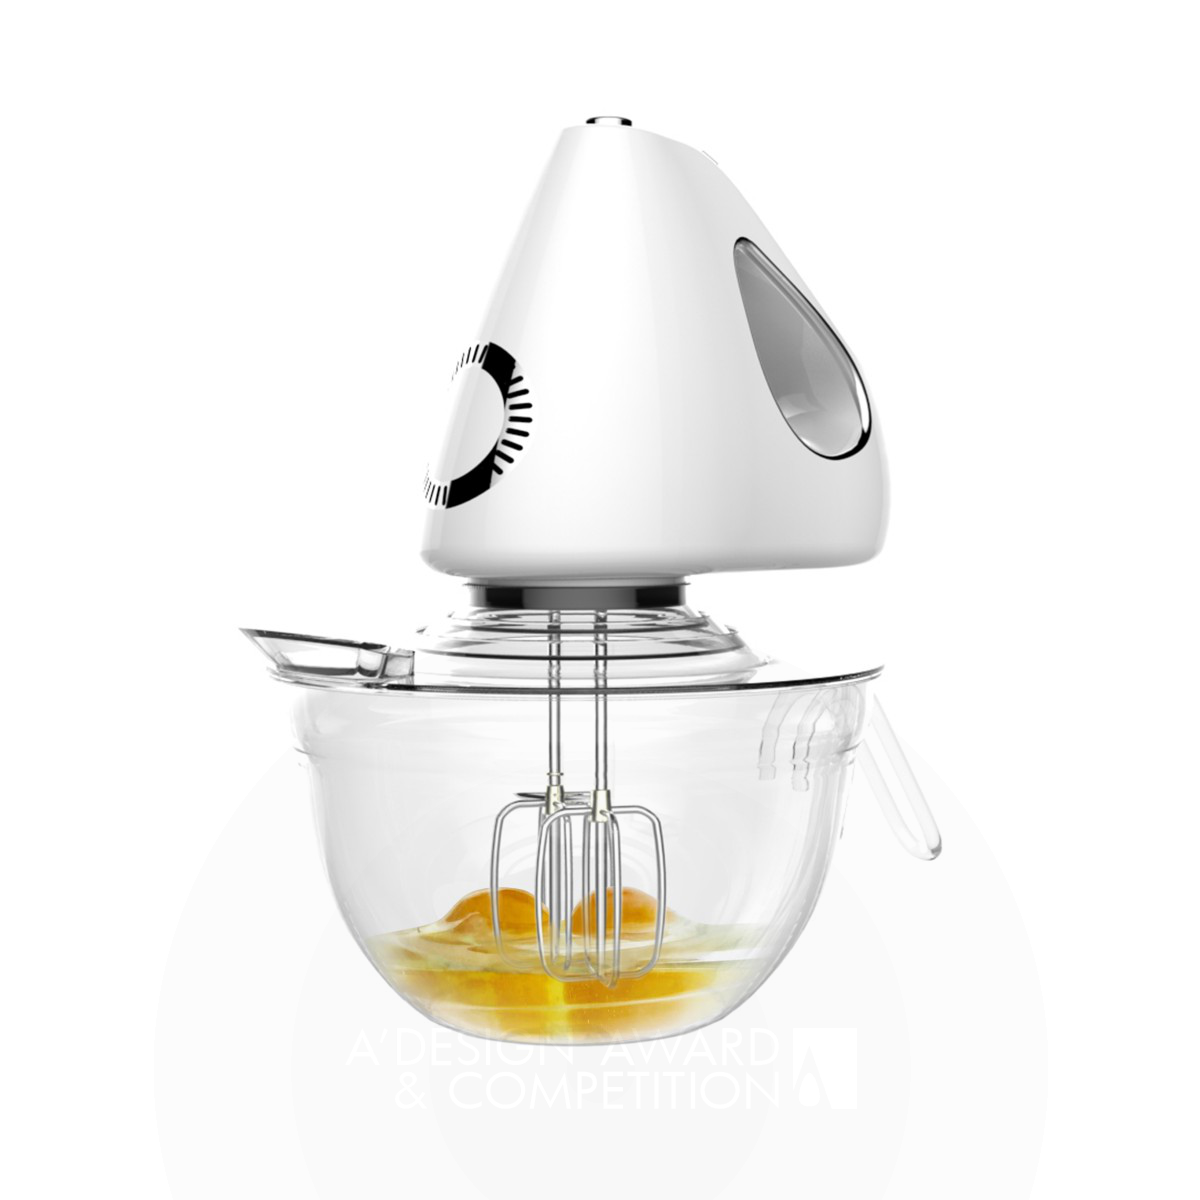 JingyeWei Electric Egg Mixer